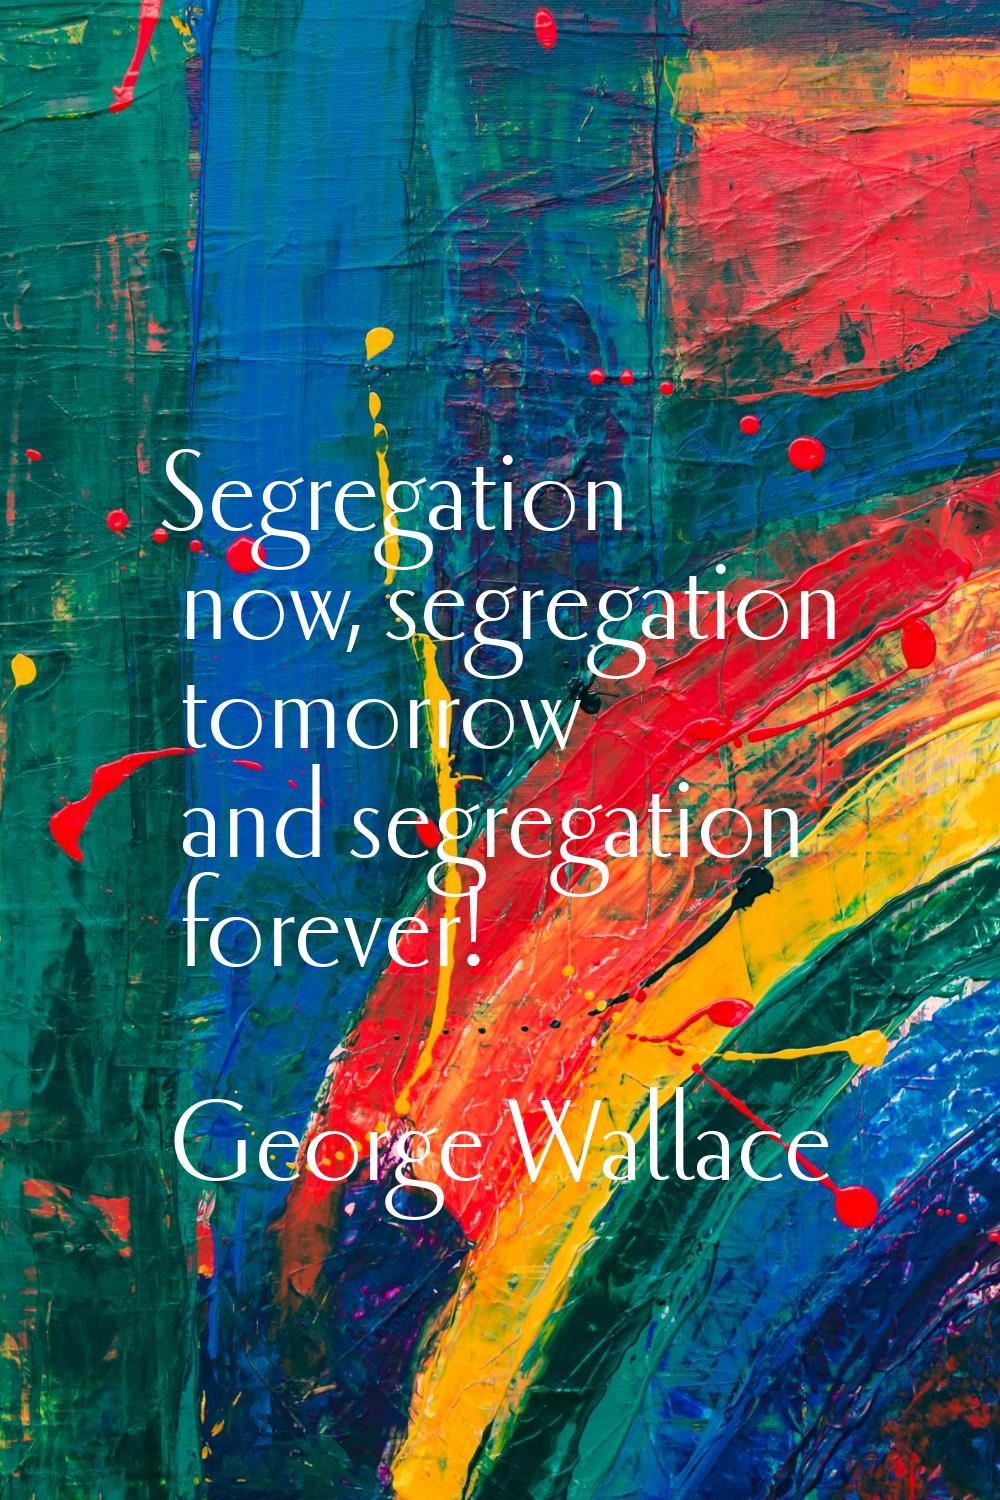 Segregation now, segregation tomorrow and segregation forever!